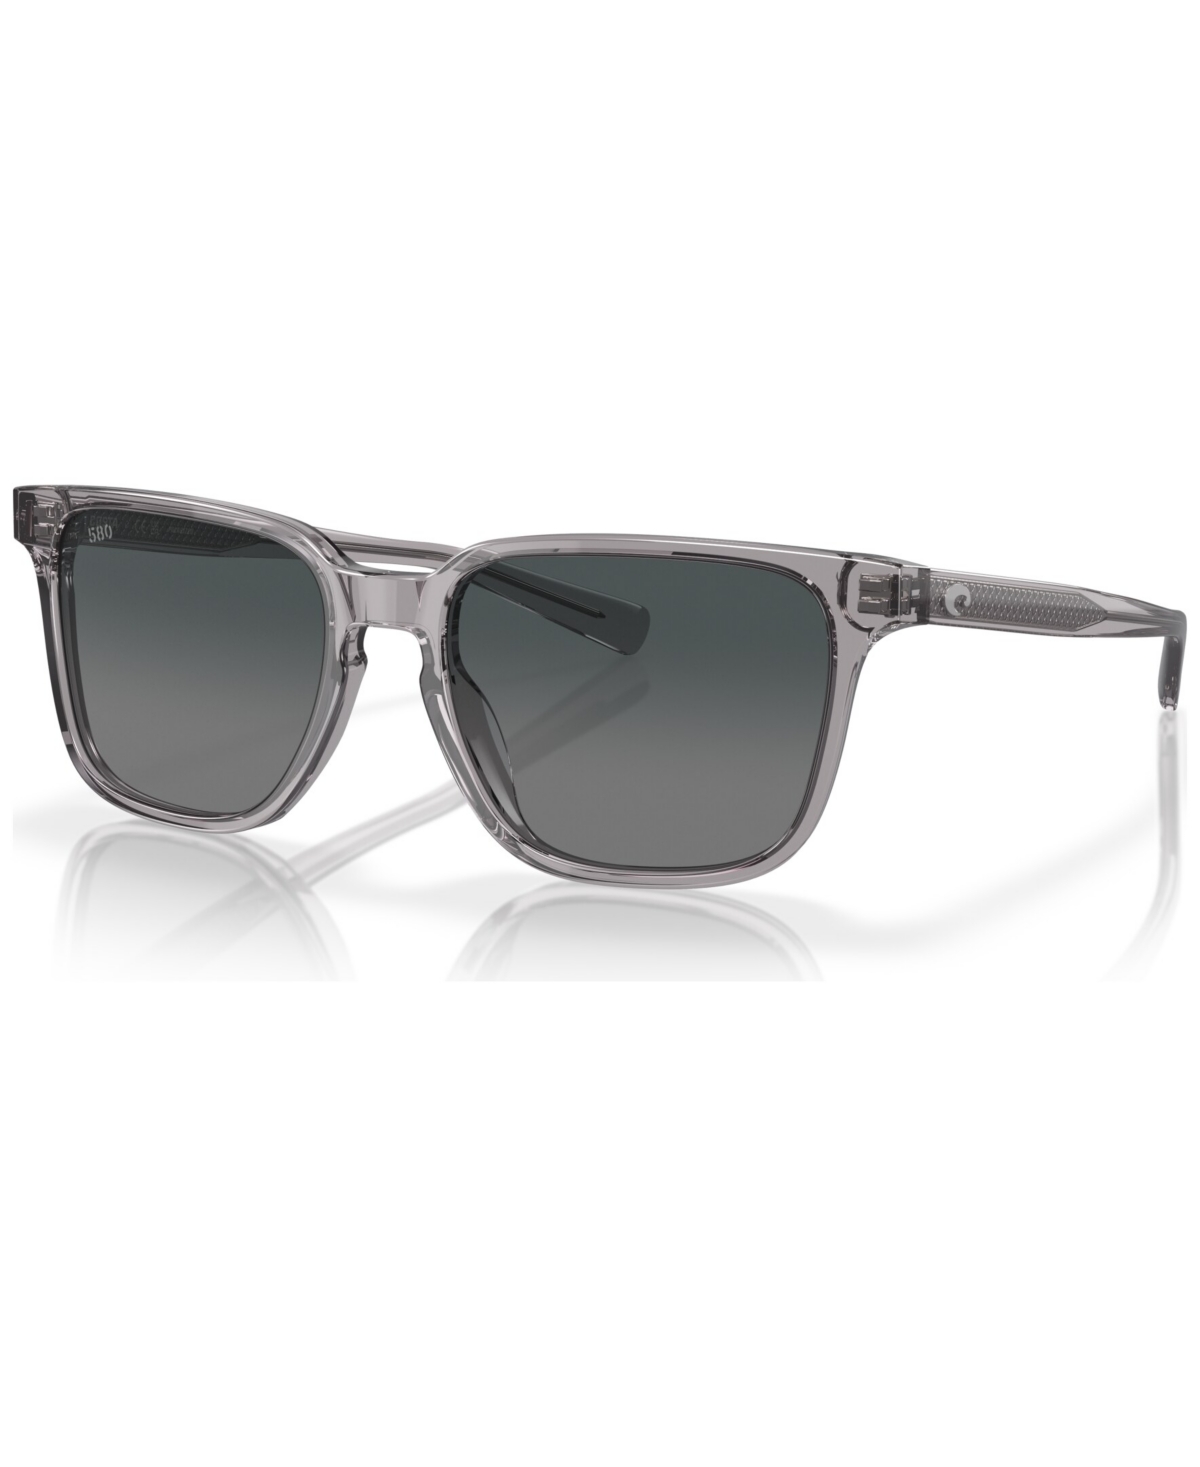 Men's Kailano Polarized Sunglasses, Gradient 6S2013 - Smoke Crystal